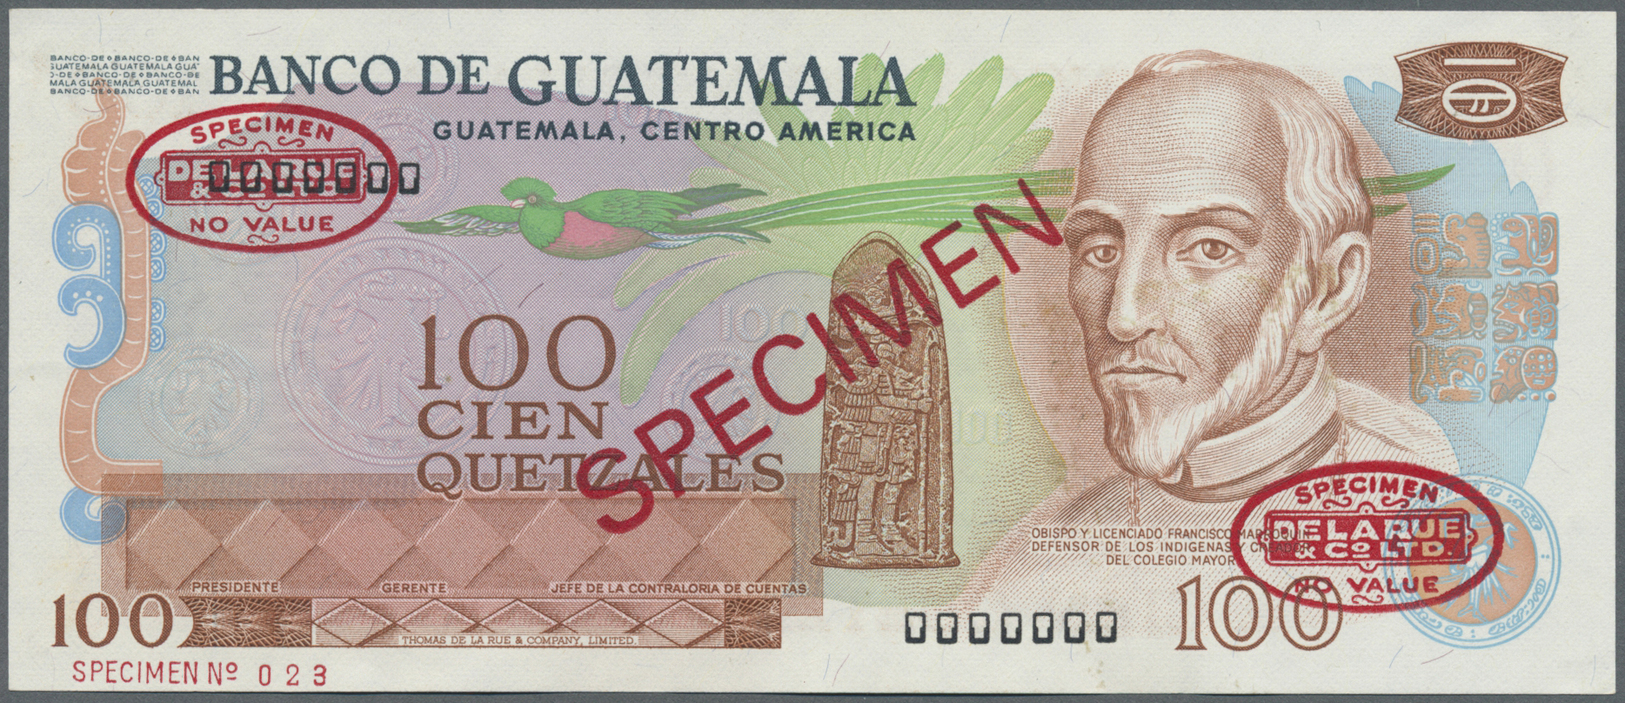 00968 Guatemala: Banco De Guatemala 100 Quetzales 1972-83 TDLR Specimen, P.64s, Traces Of Glue On Back, Otherwise Perfec - Guatemala